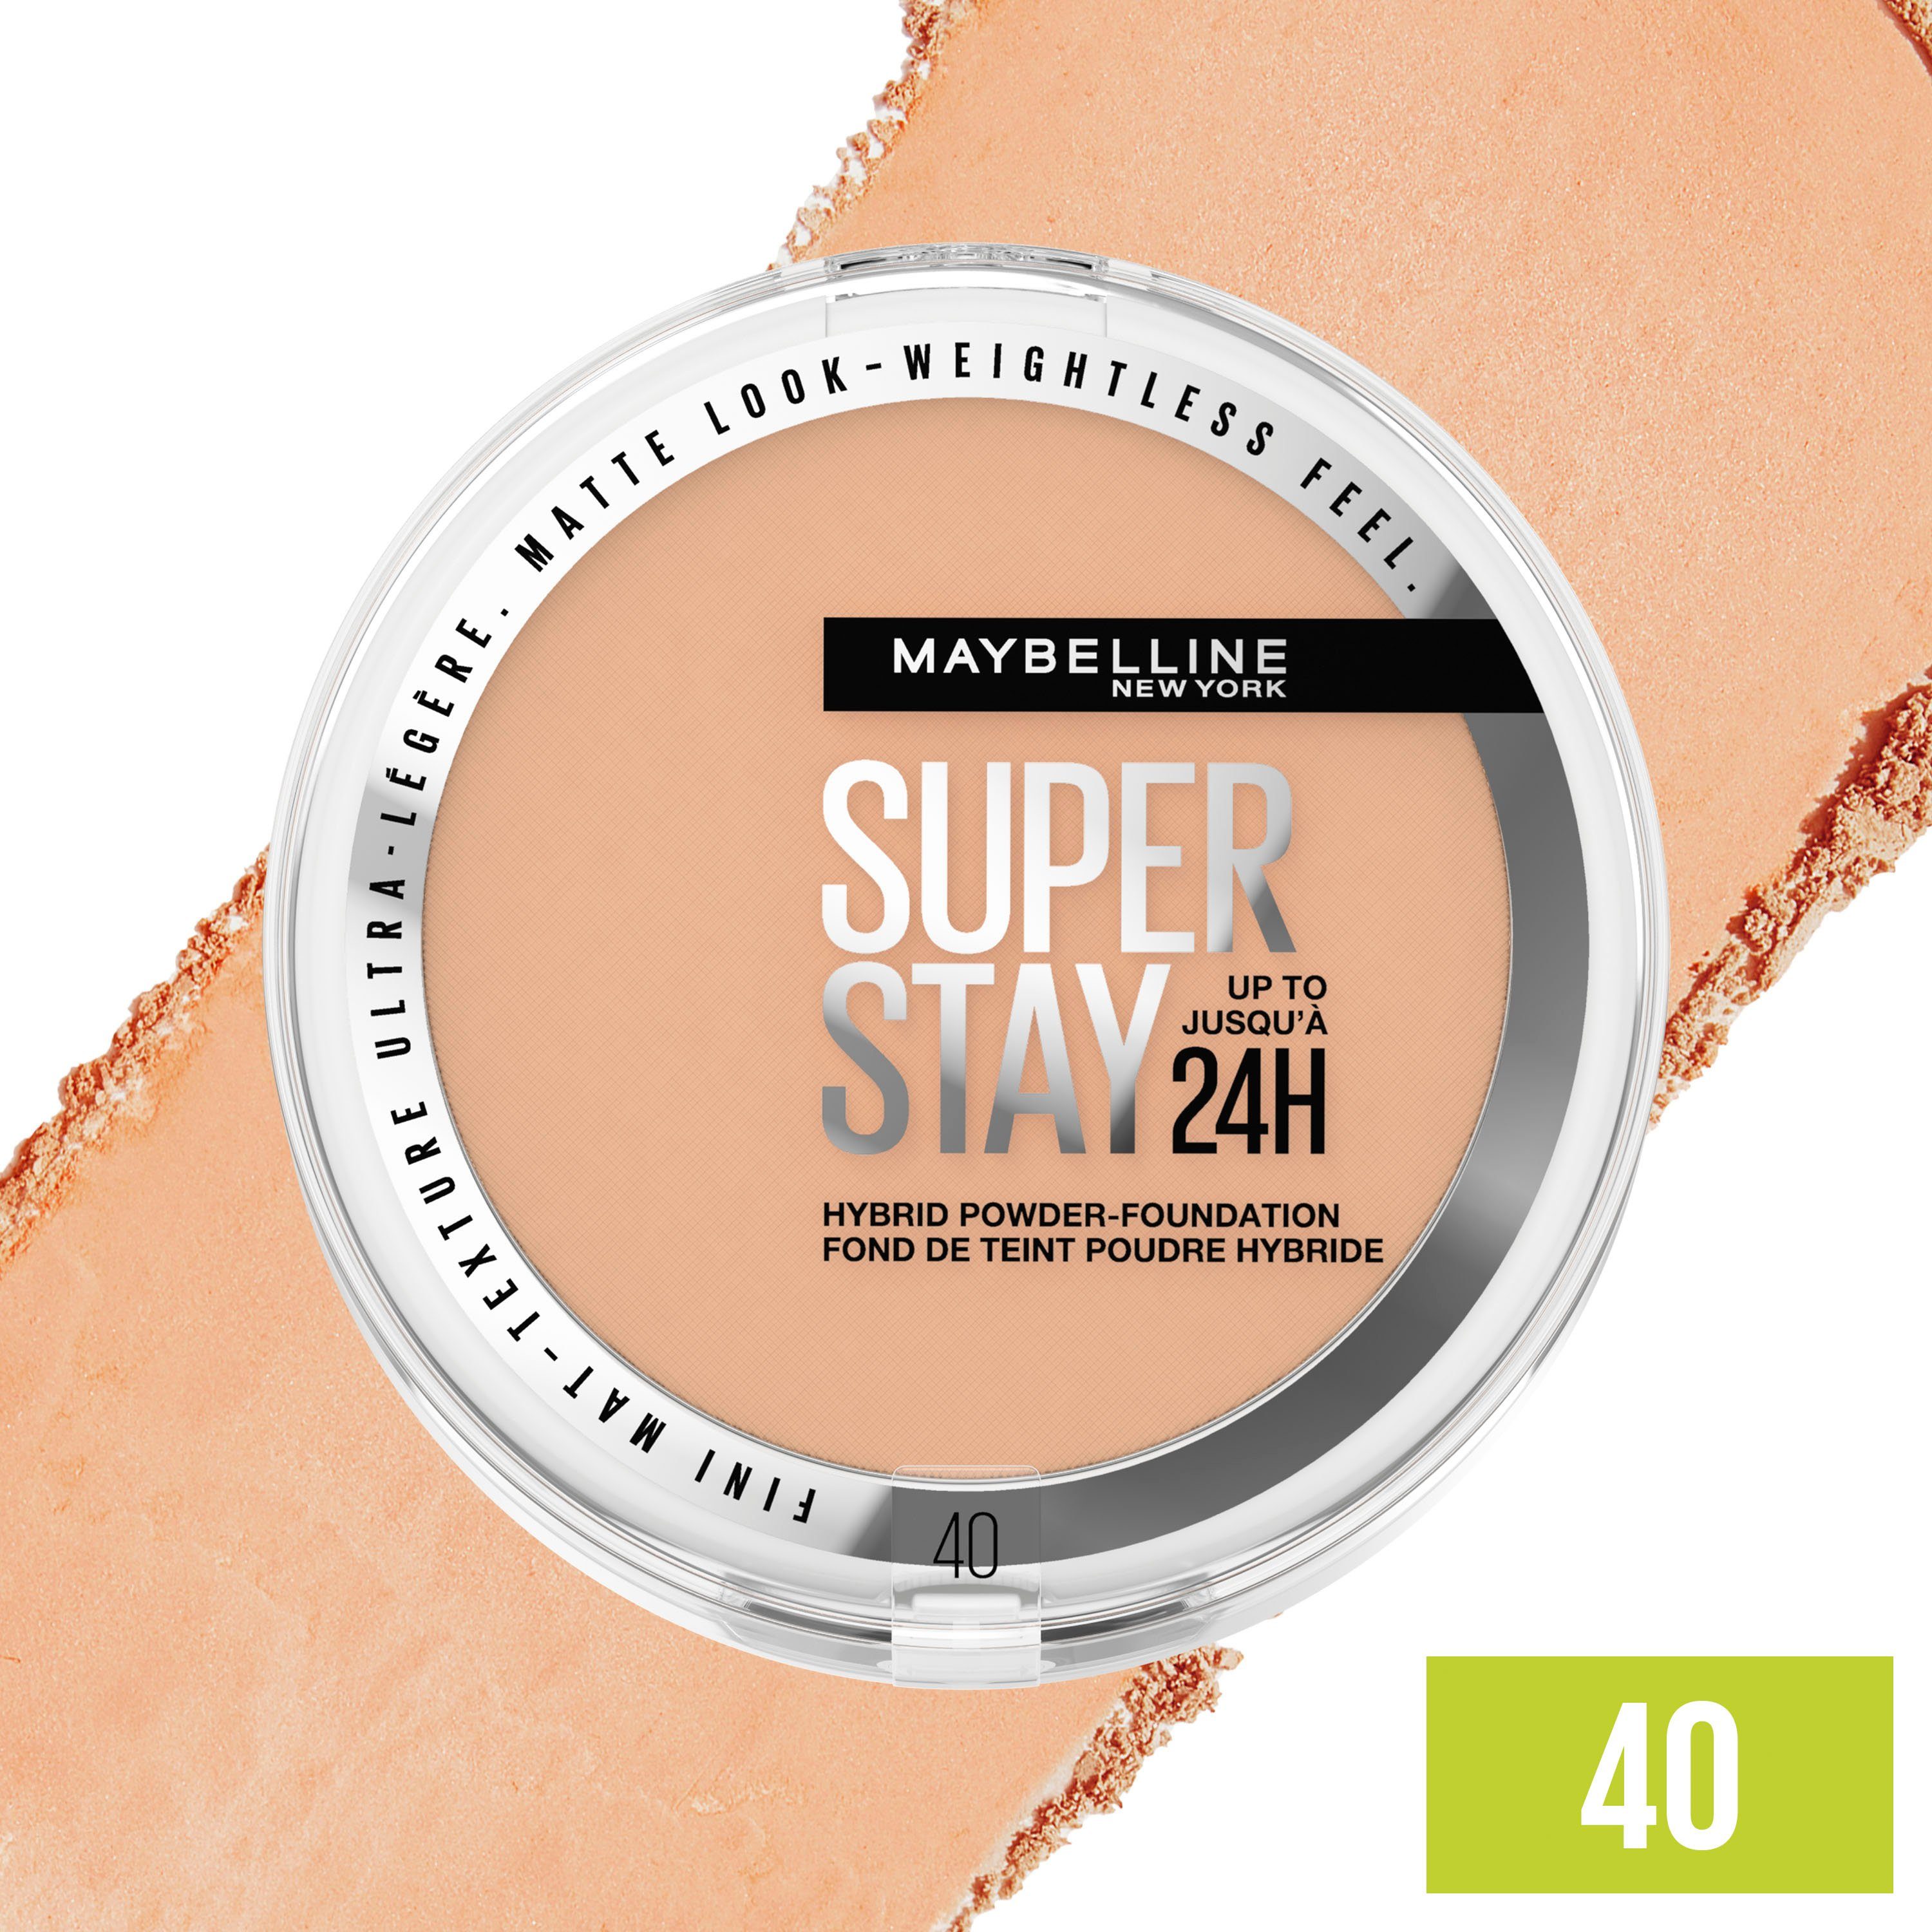 MAYBELLINE York New NEW Stay Maybelline Puder Hybrides YORK Foundation Super Make-Up